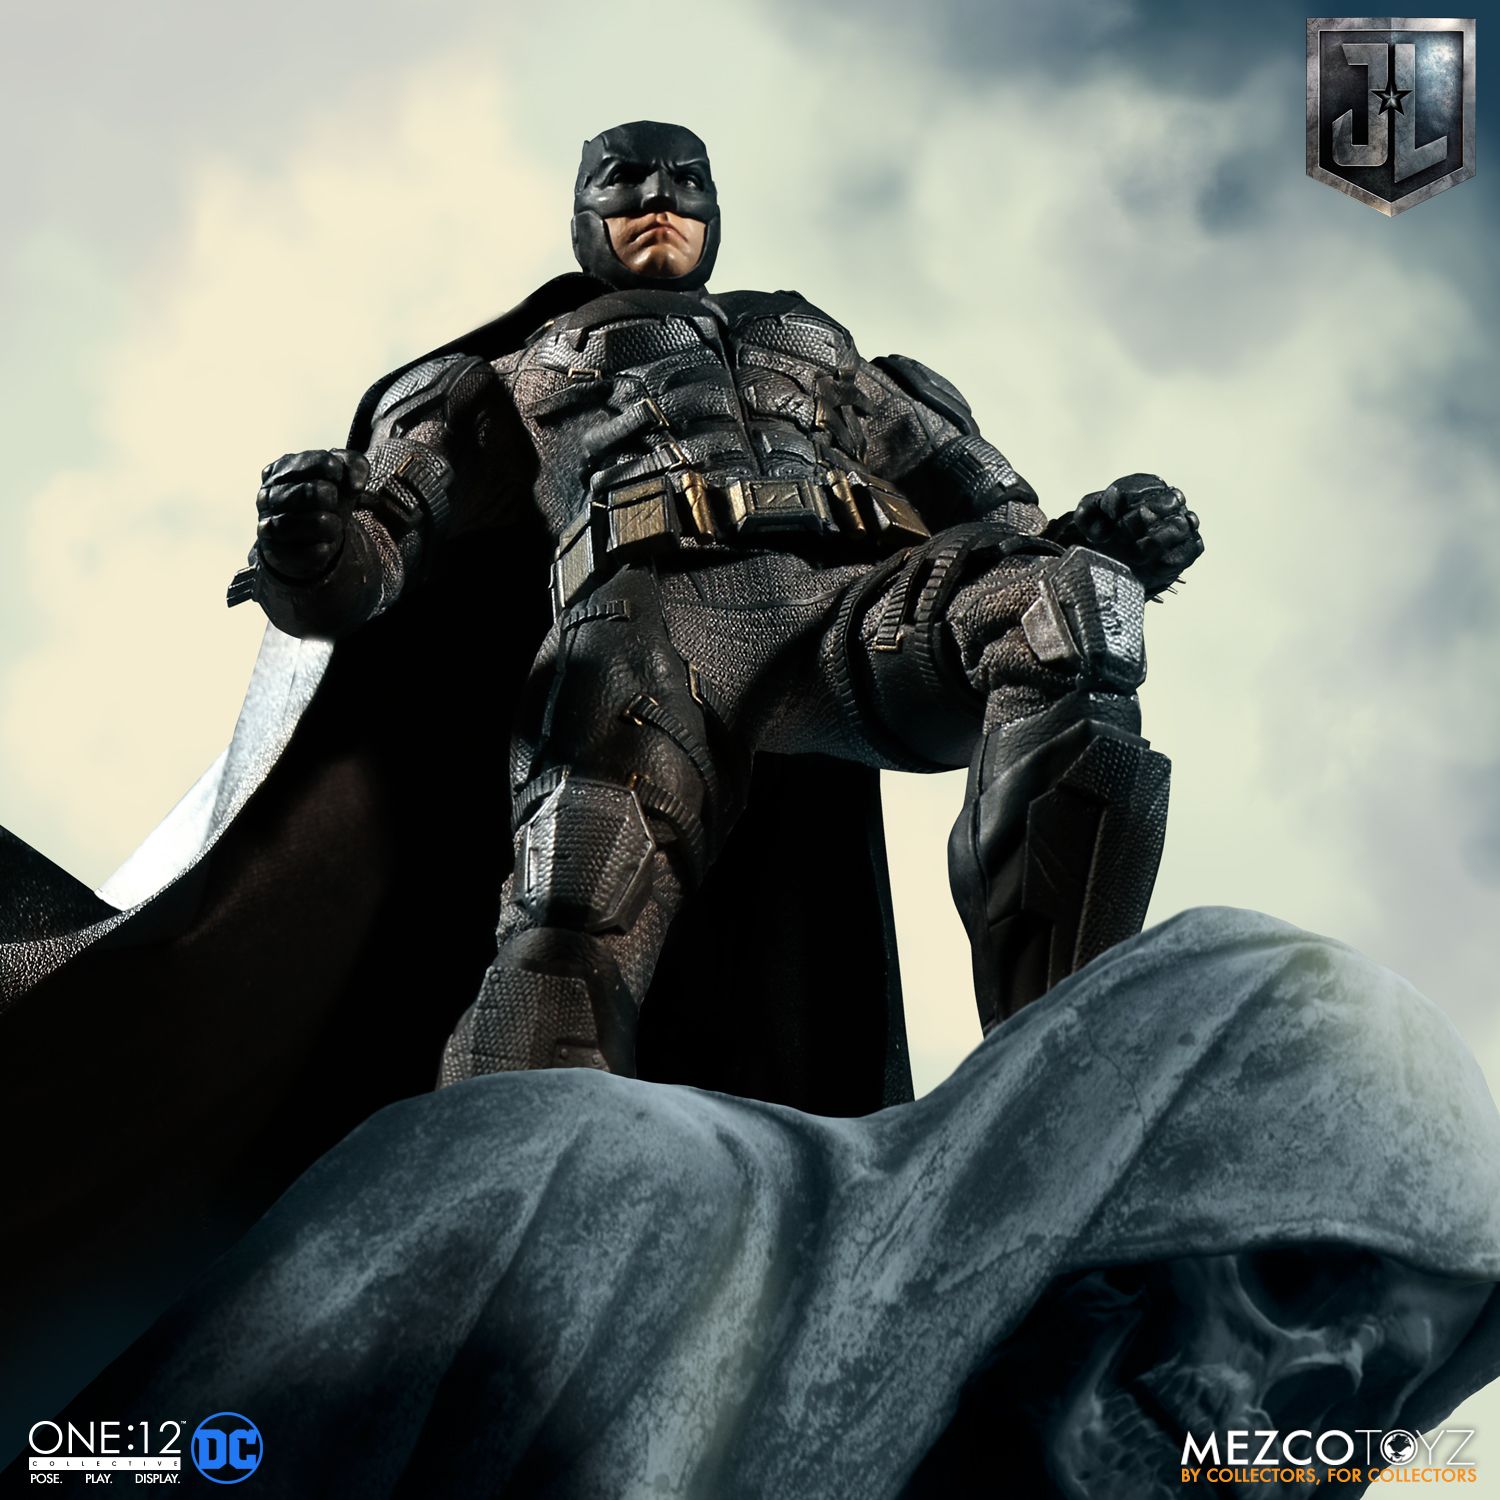 Mezco: One:12 Justice League Tactical Suit Batman Available for Preorder -  Preternia